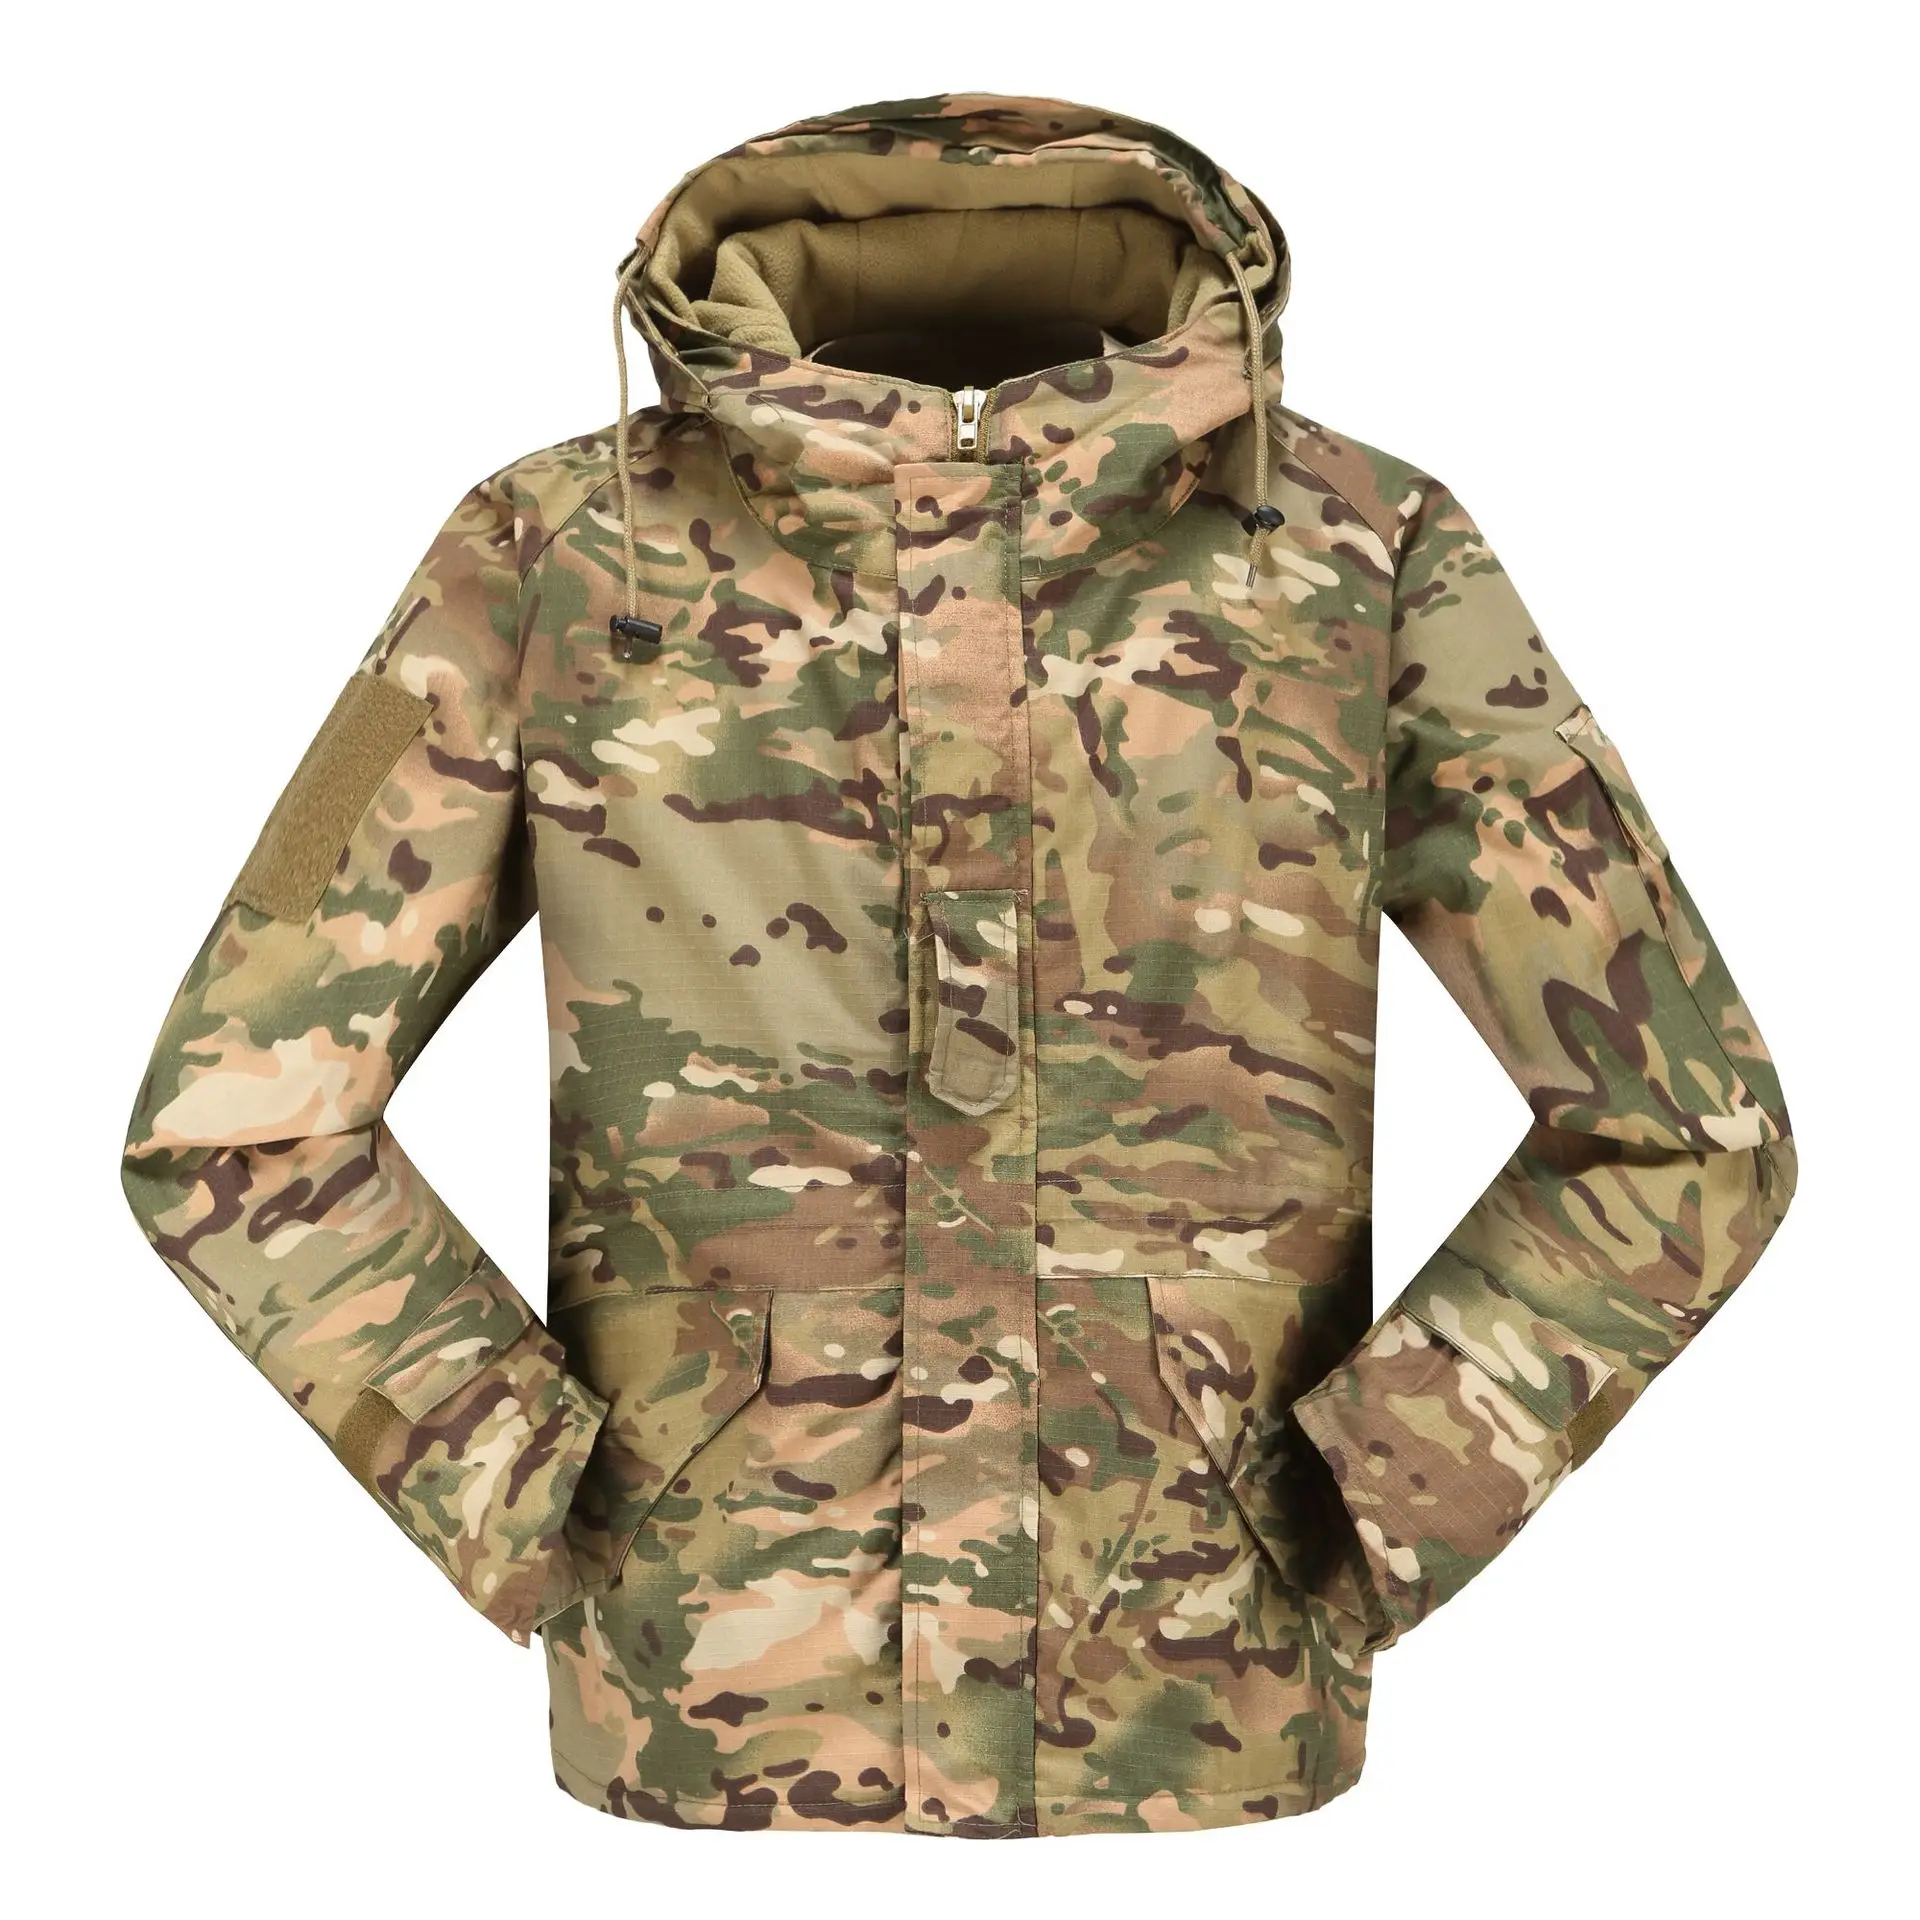 Outdoor Combat Hoodie ECWCS Field Coat tear-resistant wear-resistant warm jacket Military camo work jacket